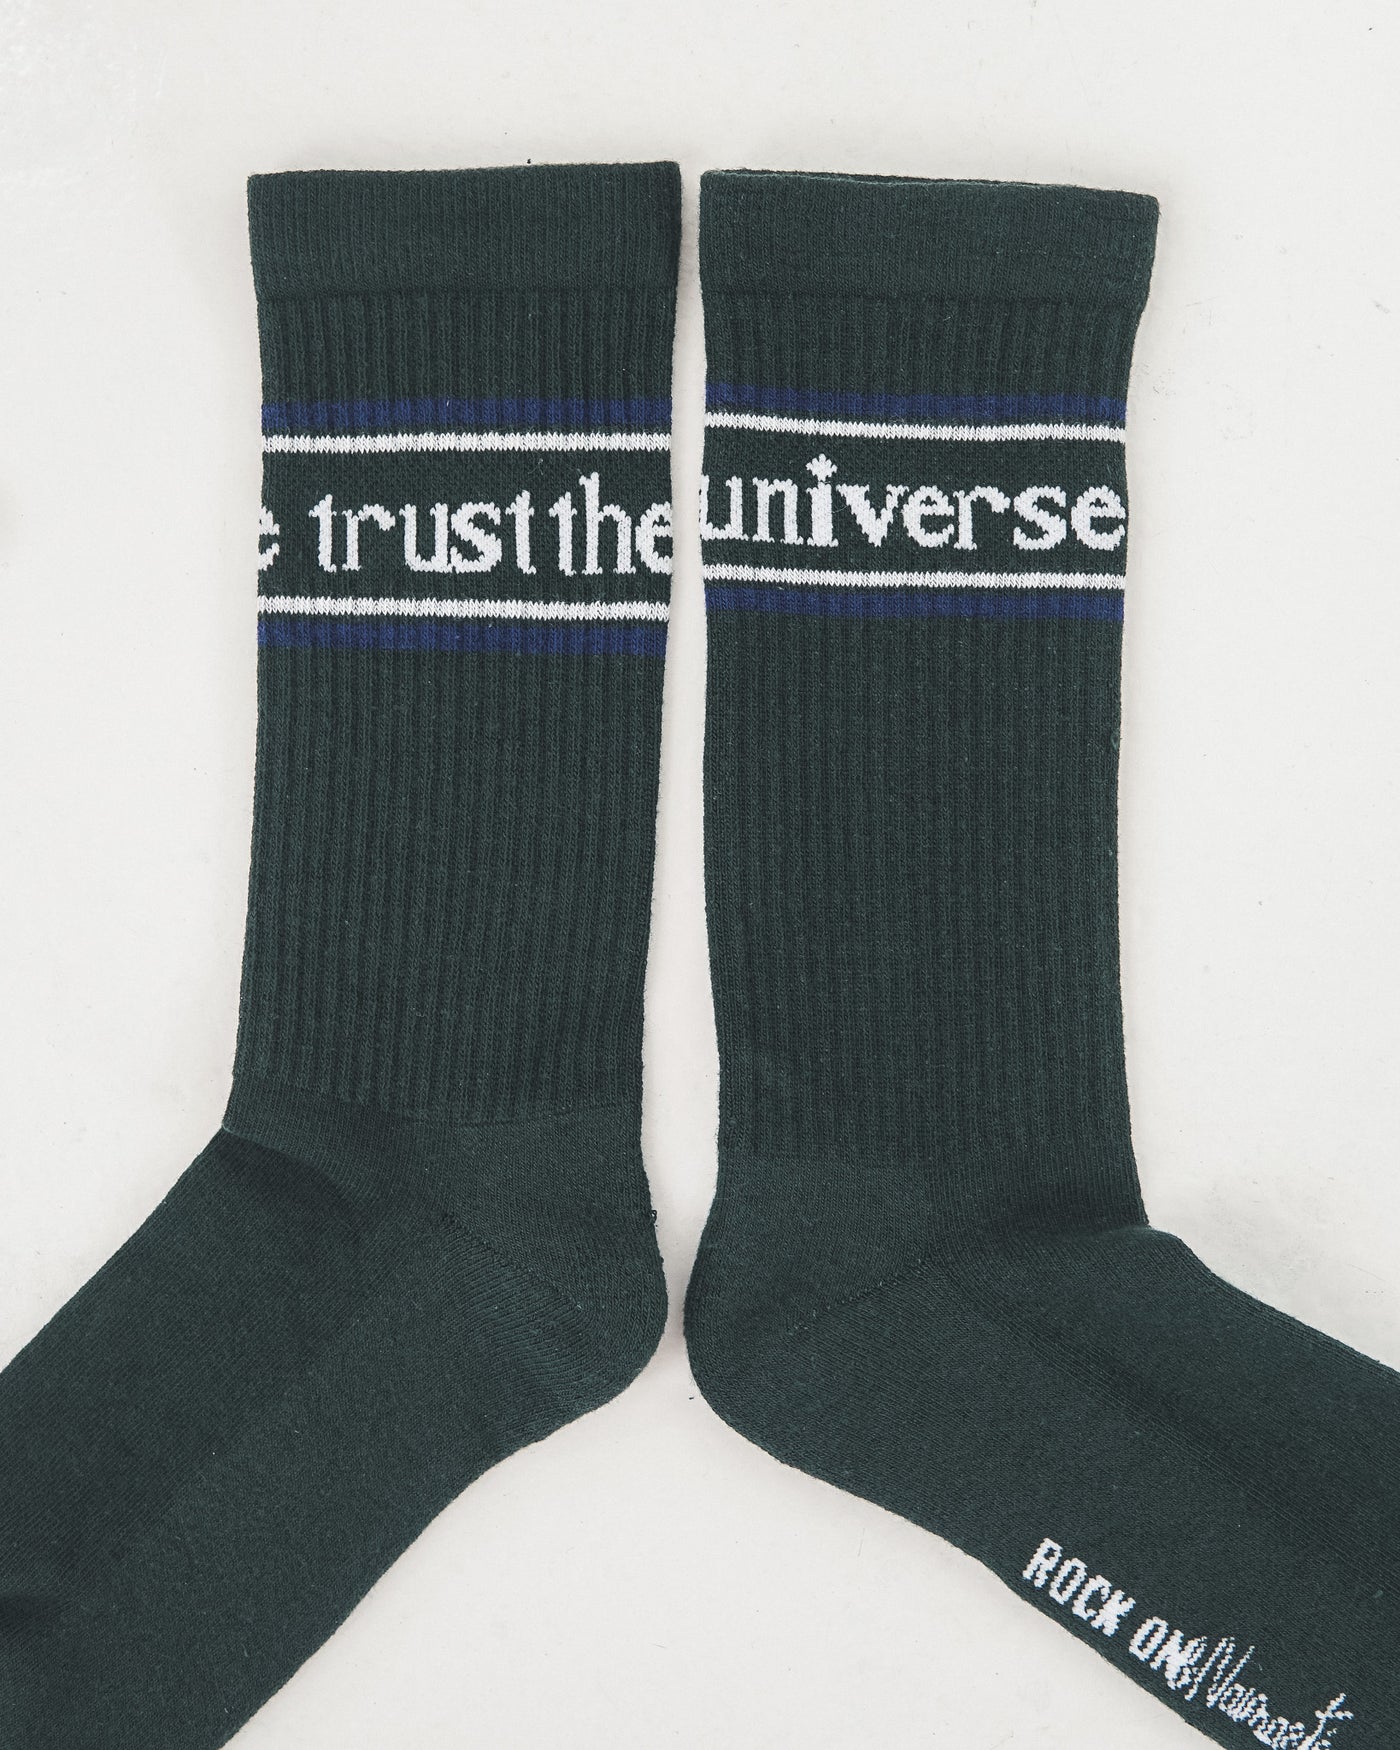 Socken trust the universe